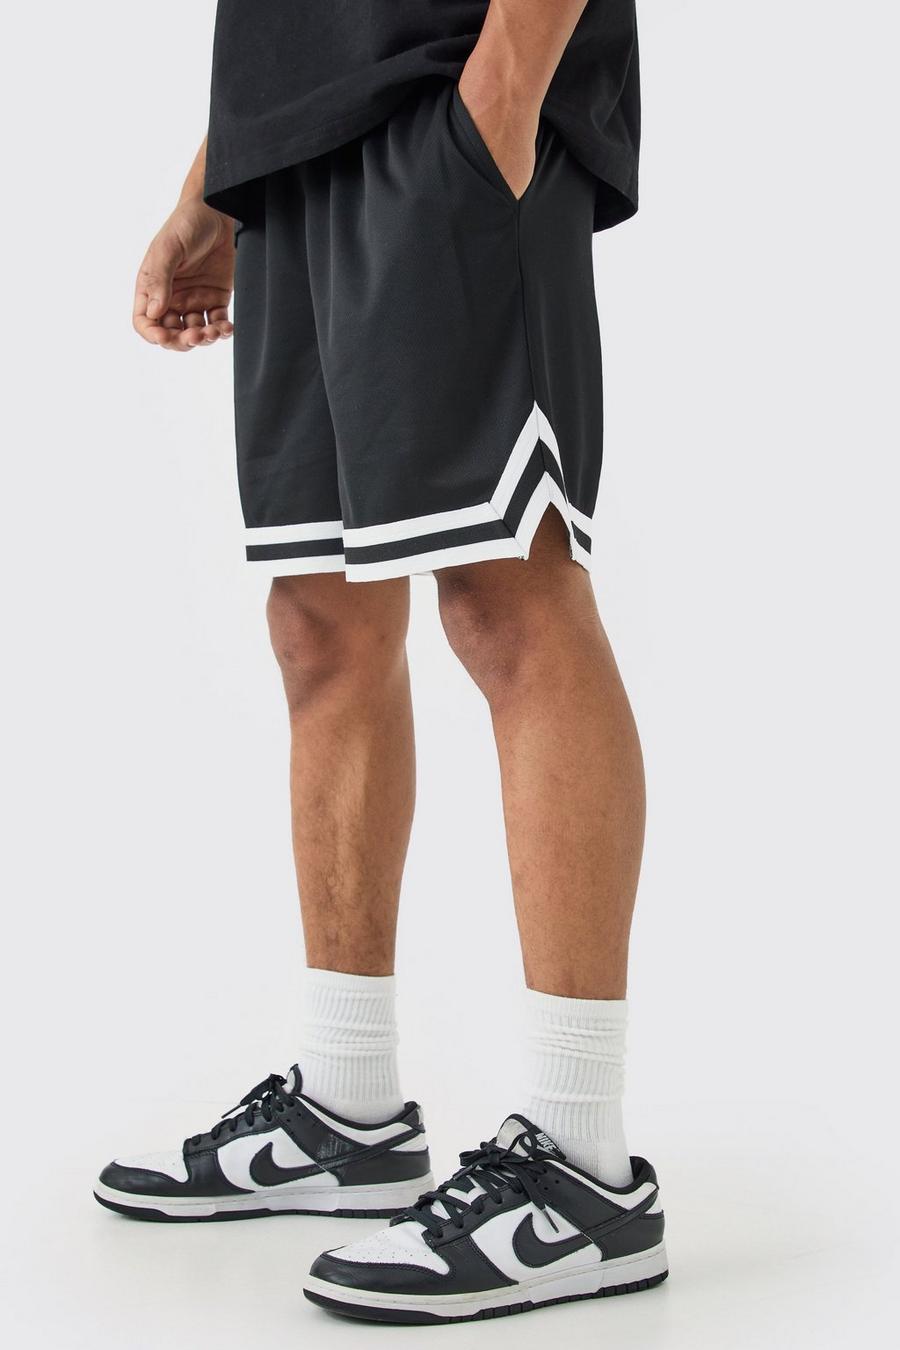 Pantalón corto holgado de malla estilo baloncesto, Black image number 1